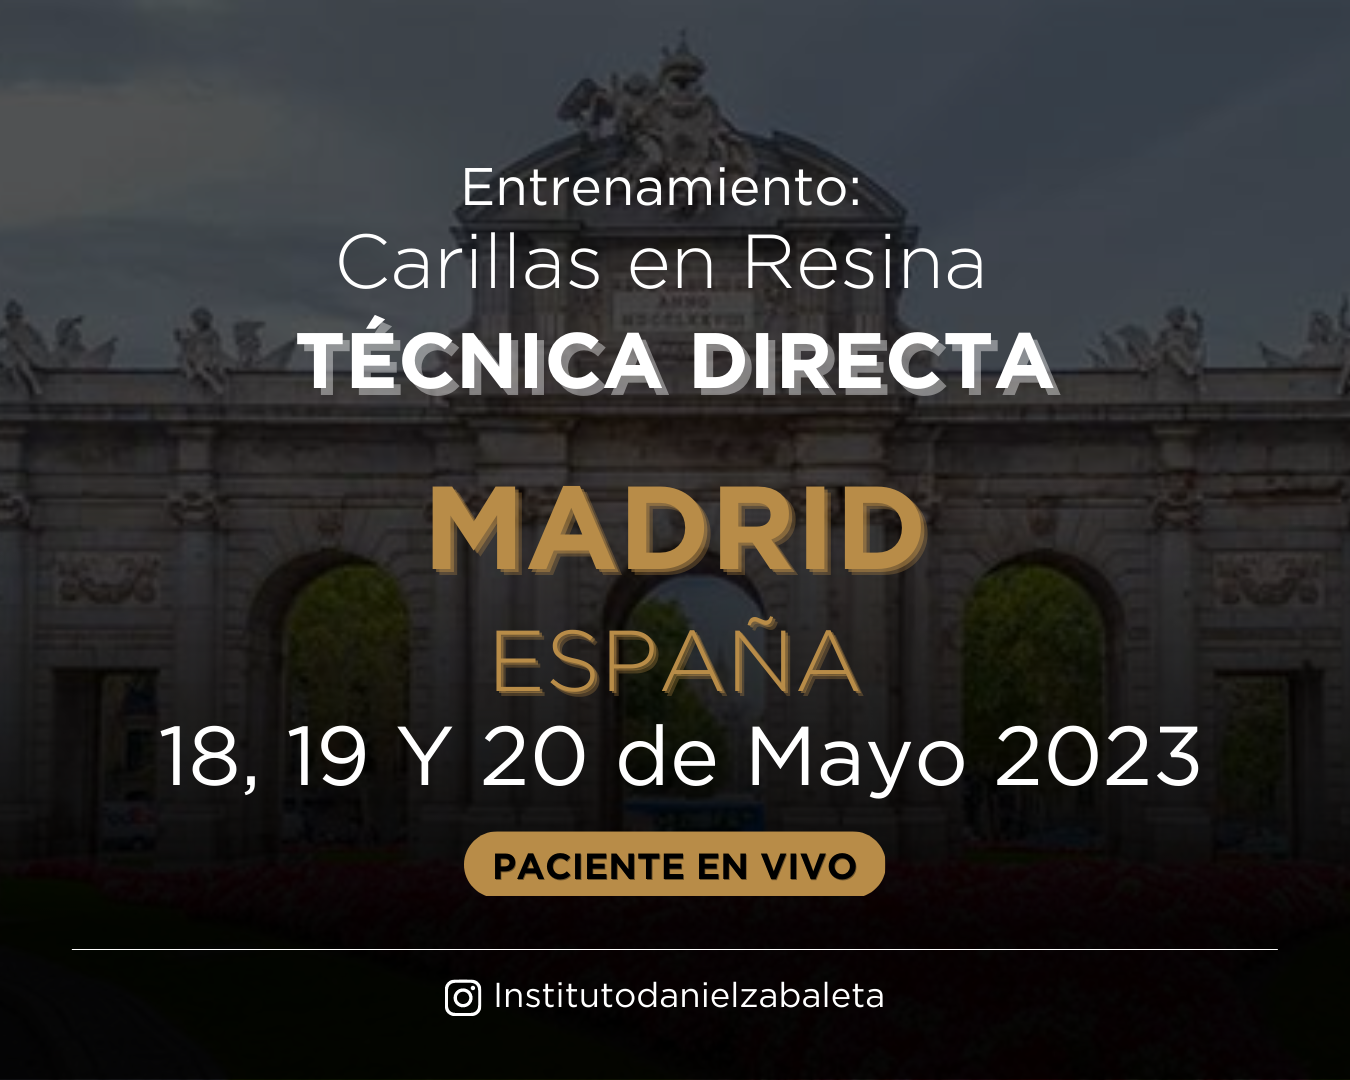 Website Entrenamiento Madrid (1350 × 1080 px)